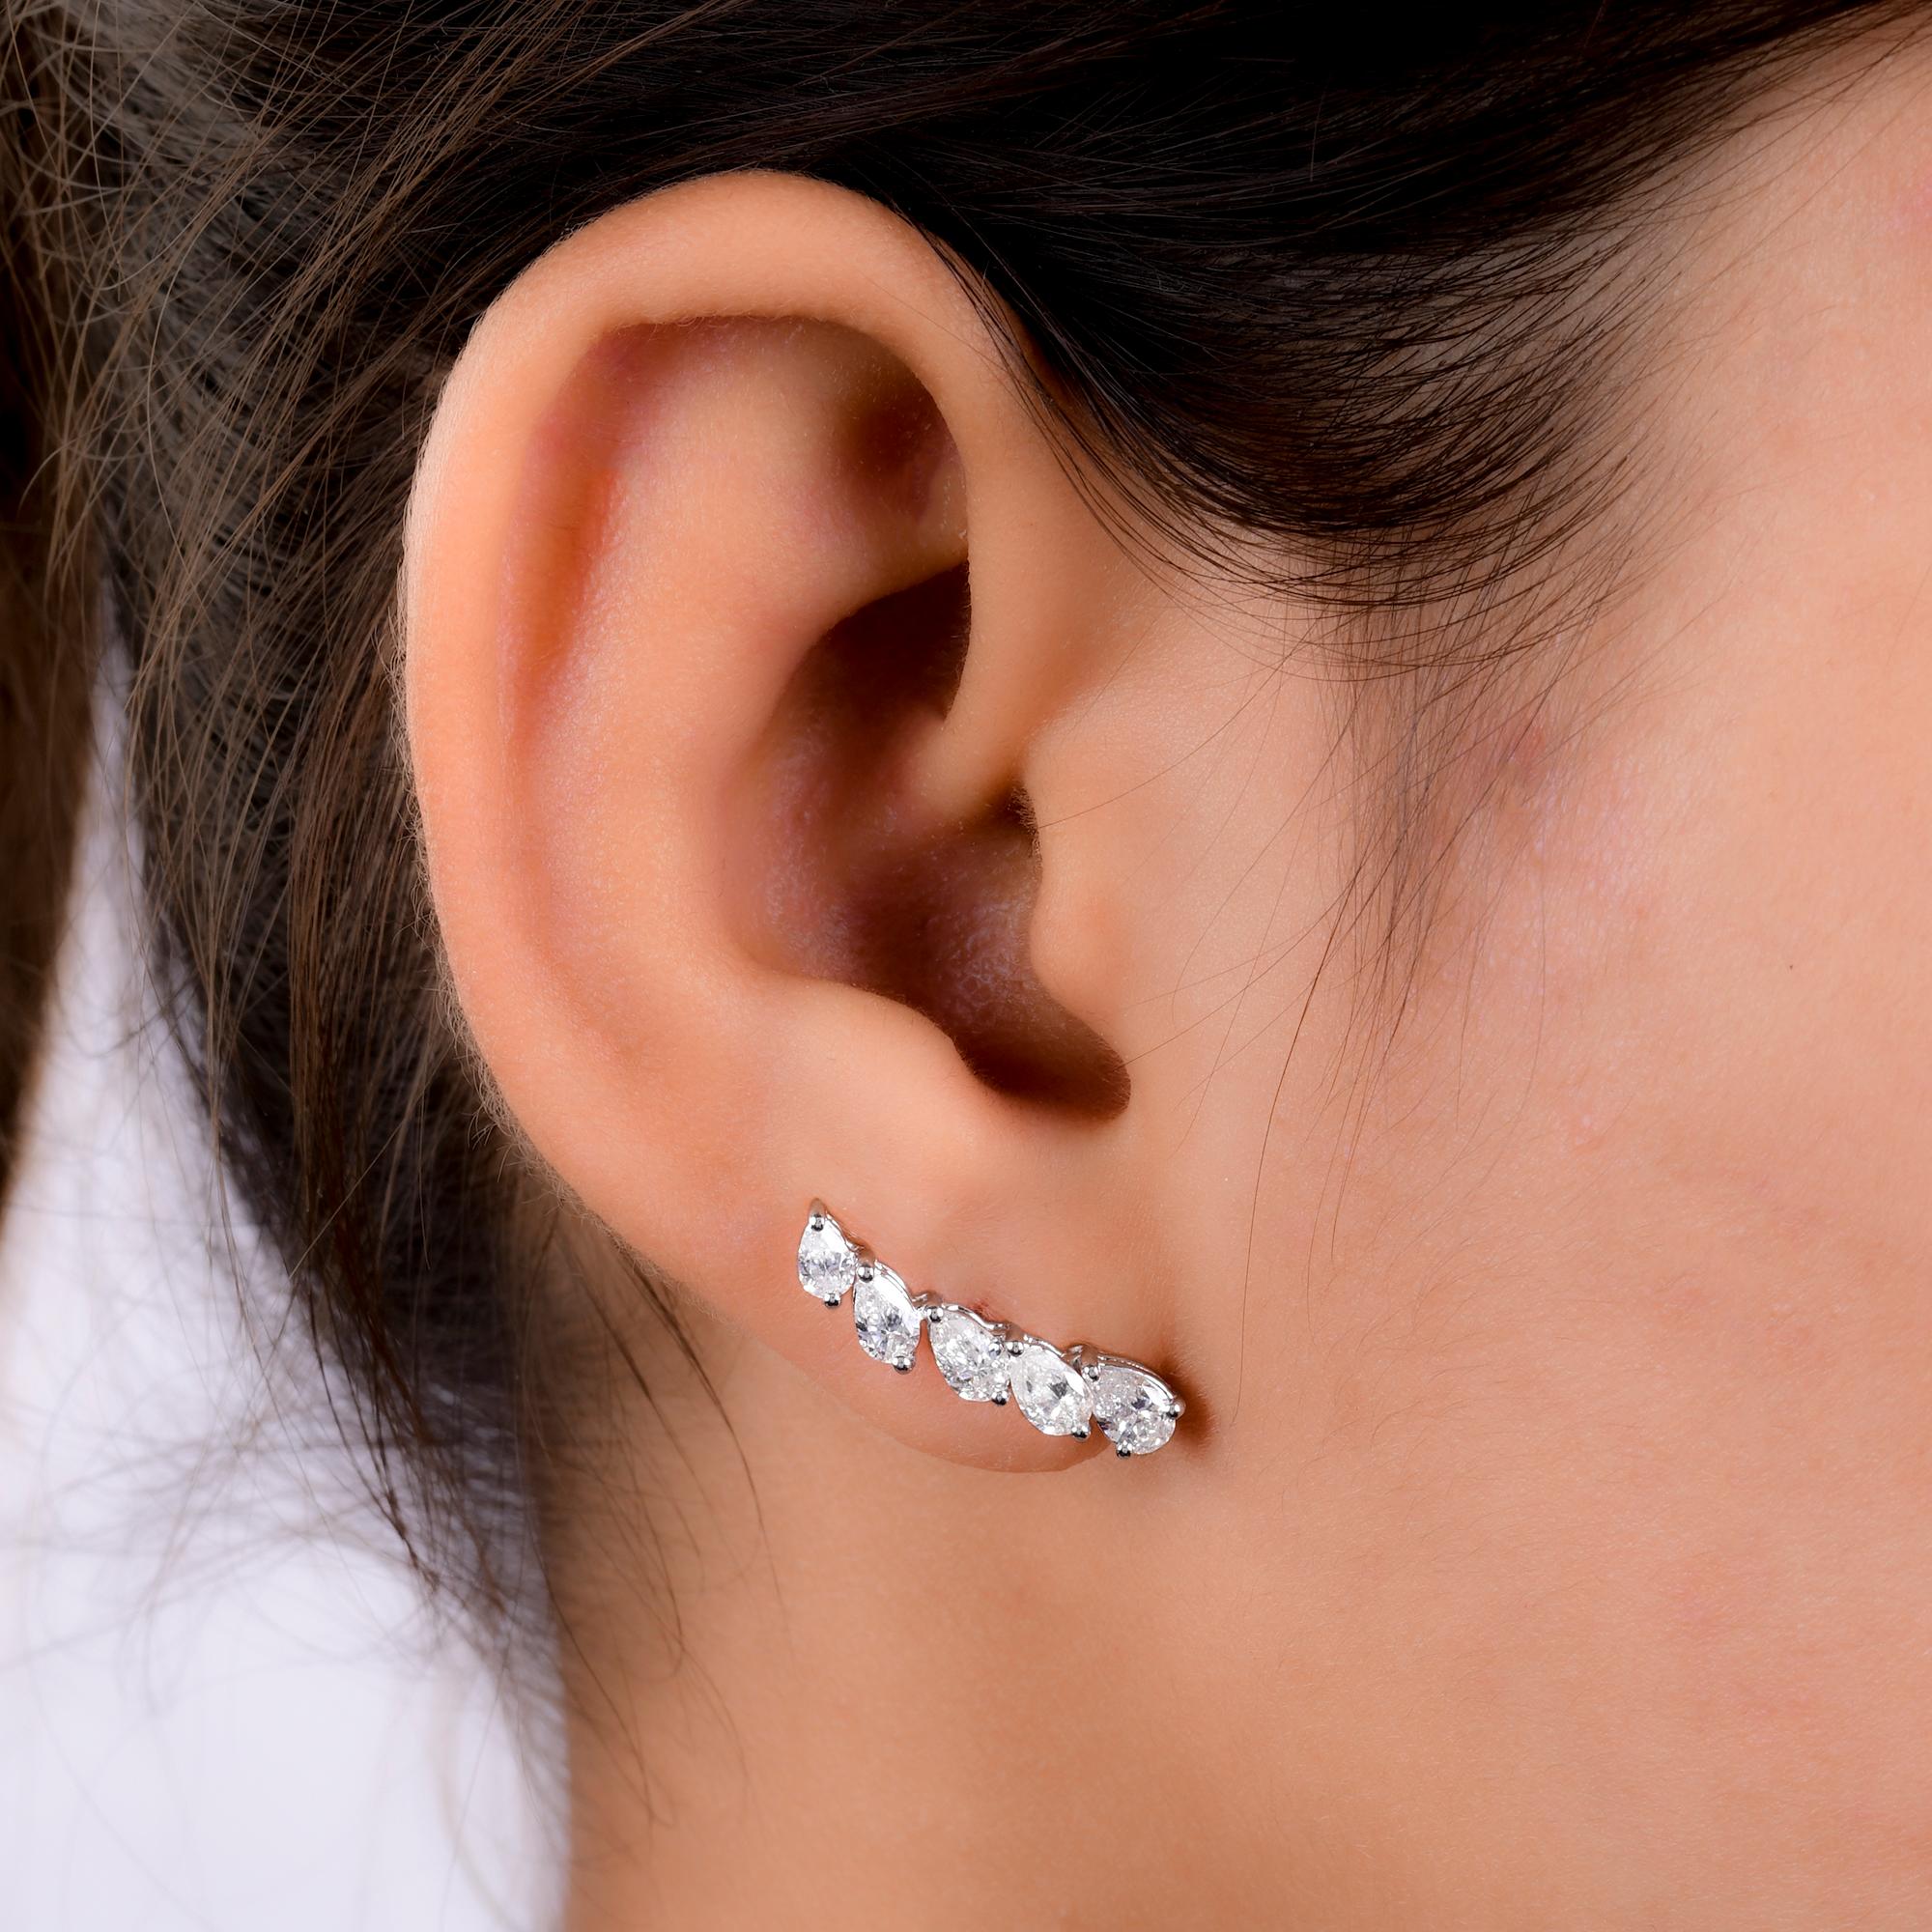 Modern Natural 1.58 Carat Pear Shape Diamond Stud Earrings 18 Karat White Gold Jewelry For Sale